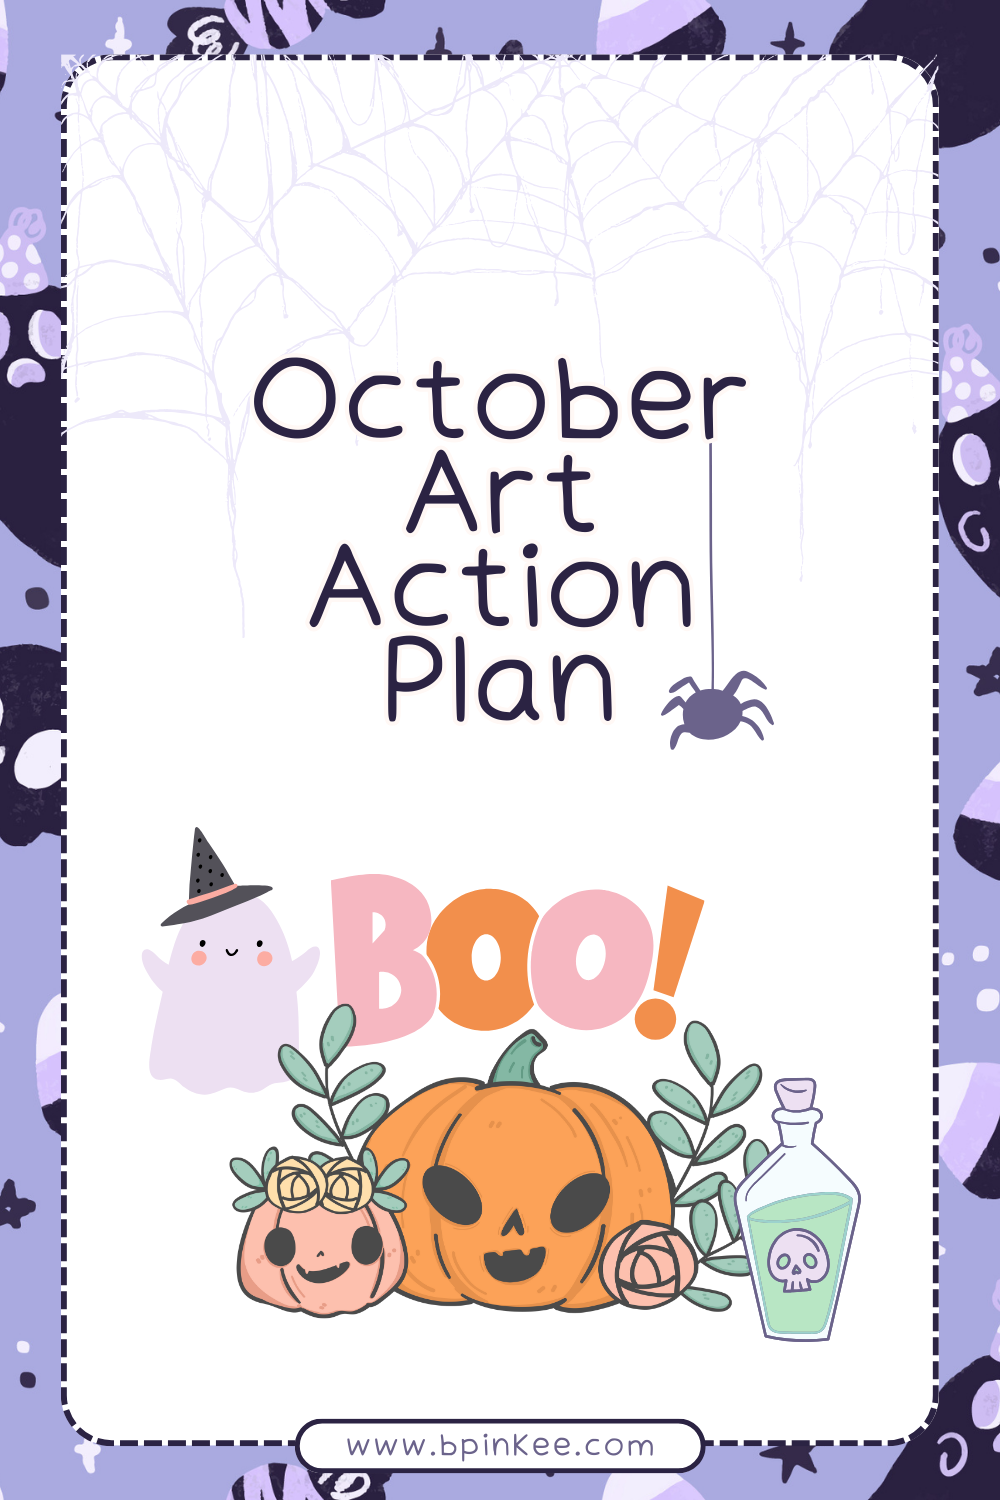 October Art Action Plan